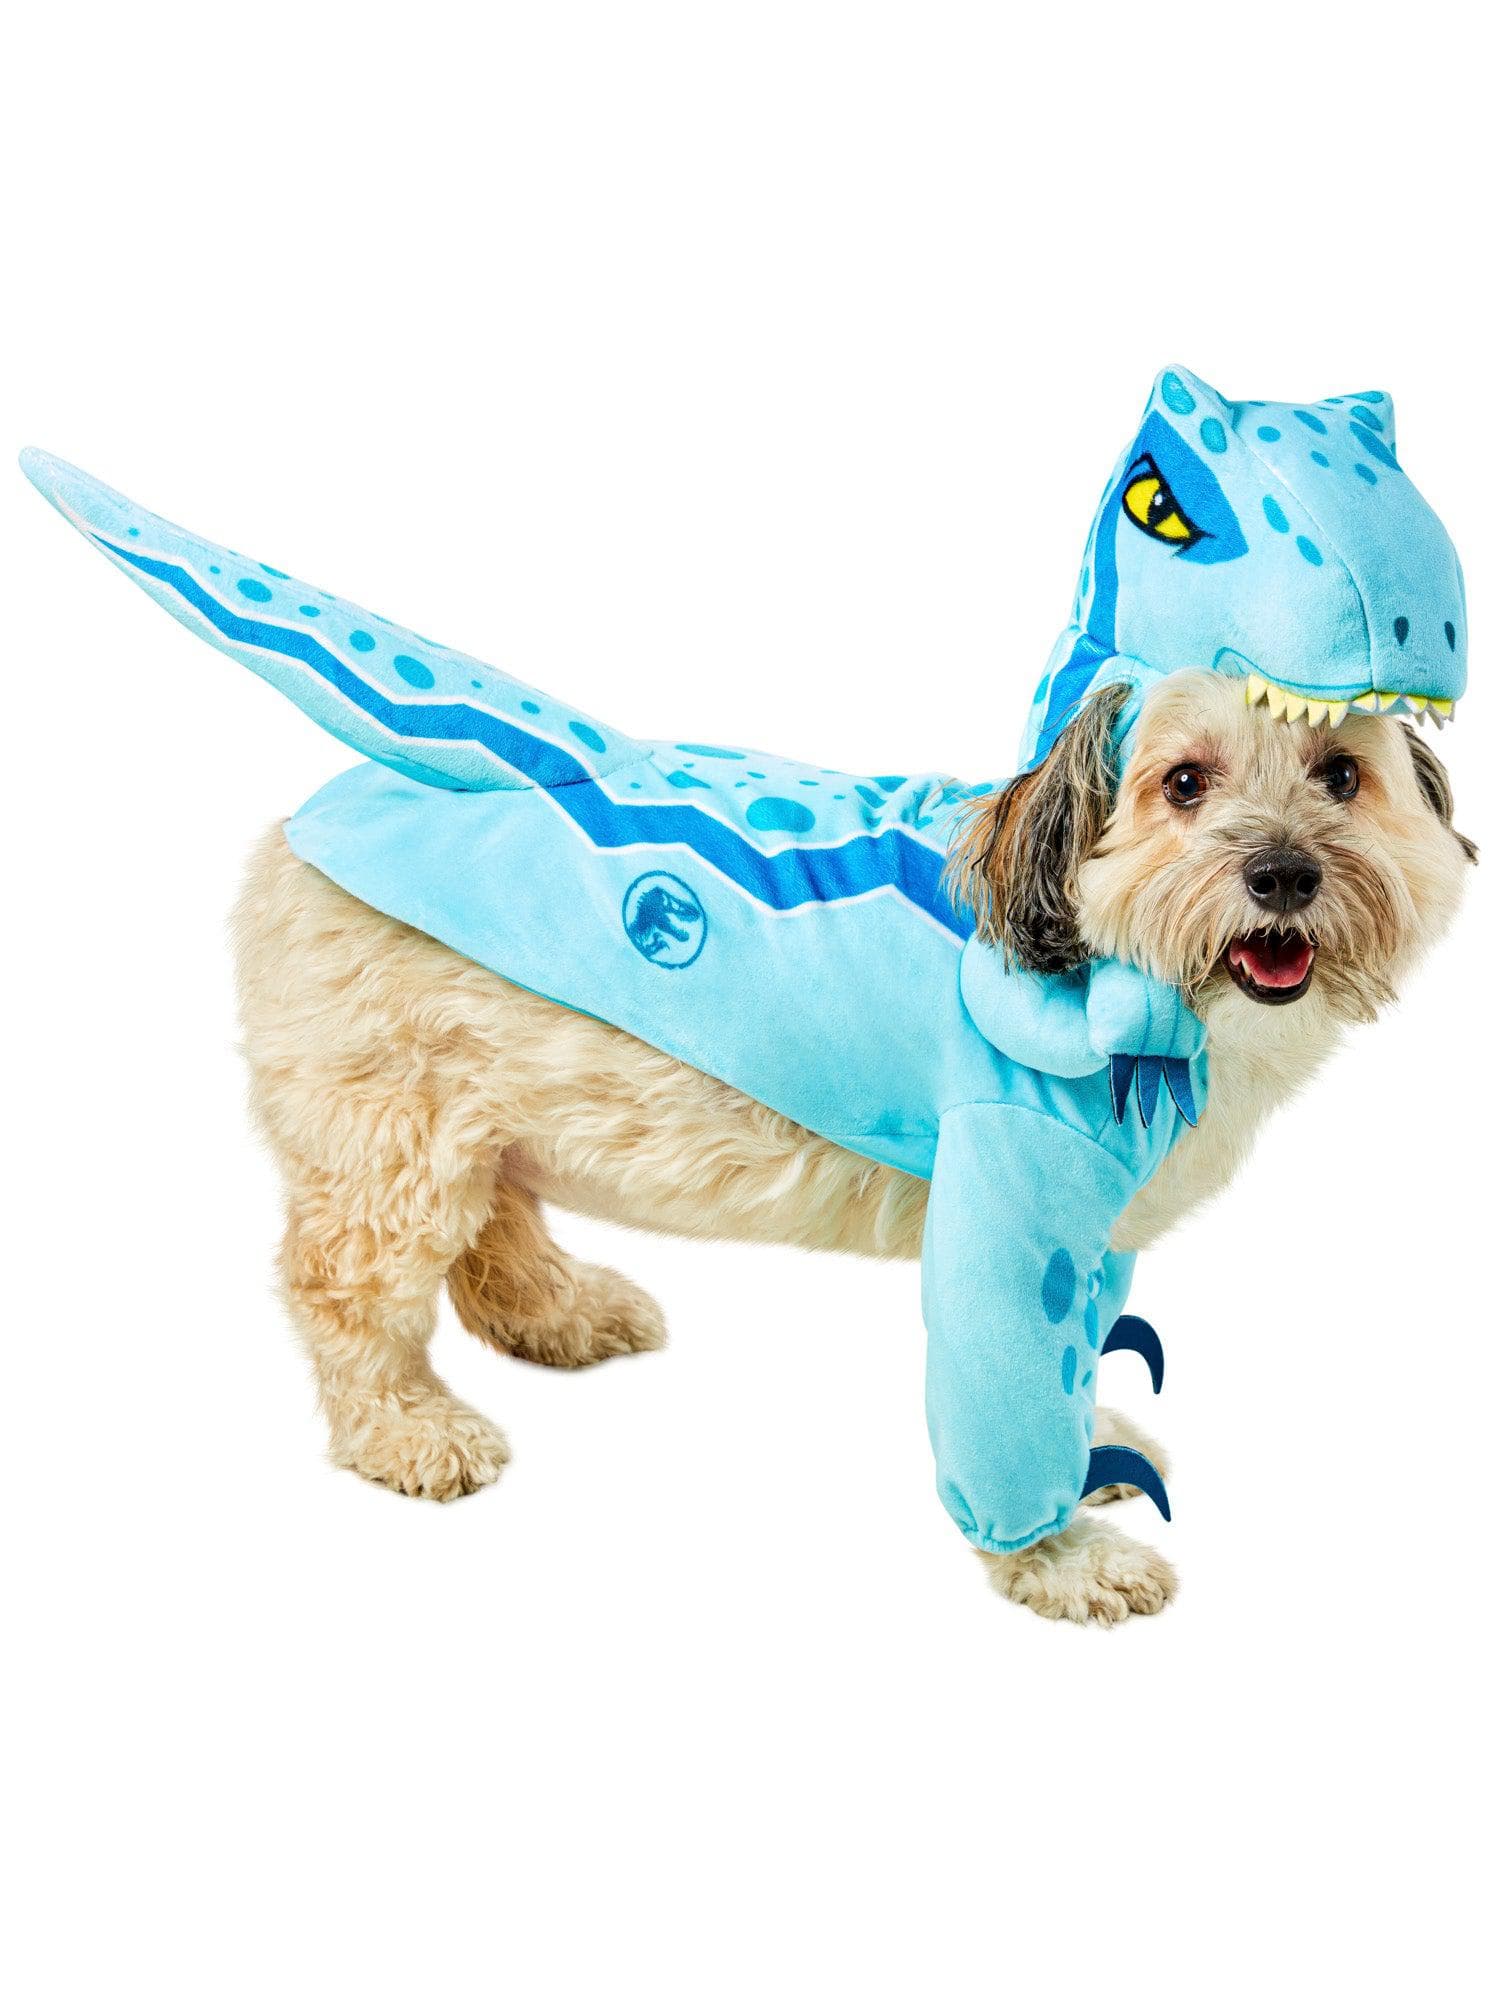 Jurassic World Blue Velociraptor Pet Costume - costumes.com